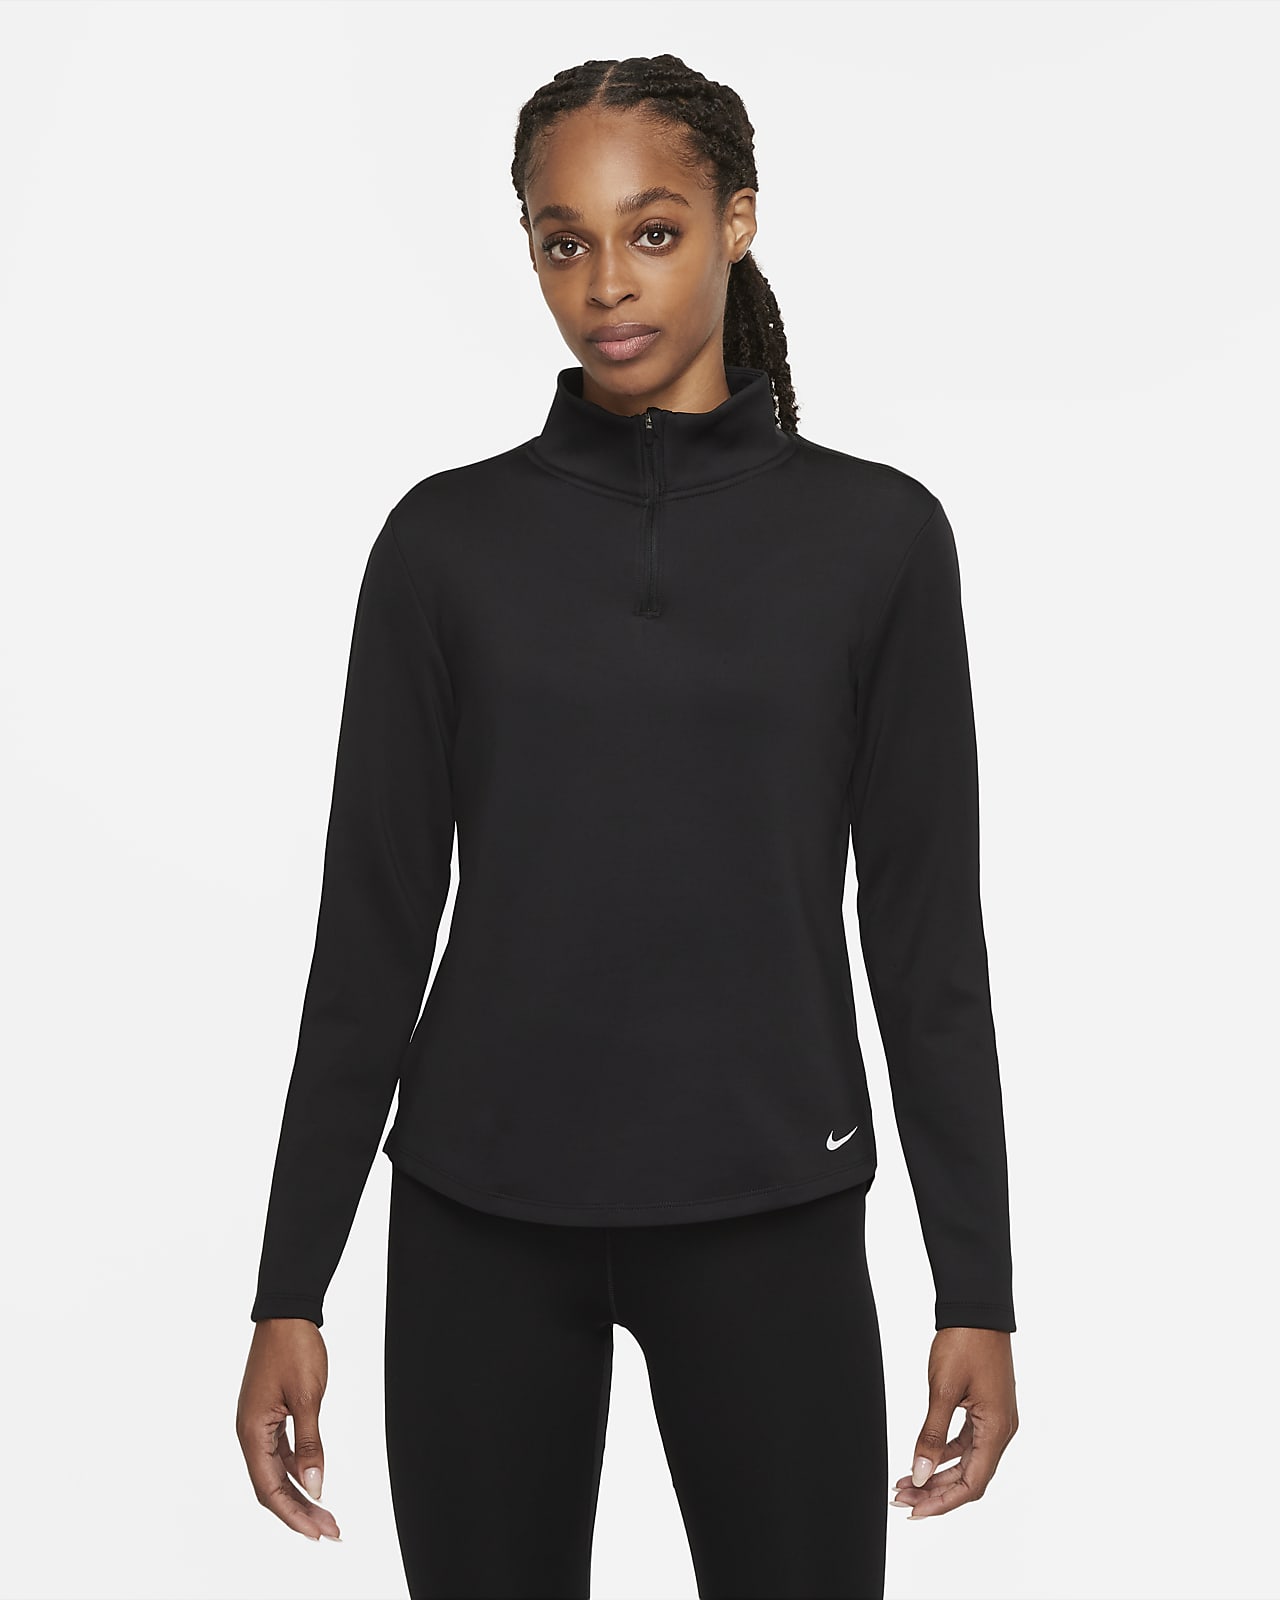 Nike Therma-FIT One Women's Long-Sleeve 1/2-Zip Top.